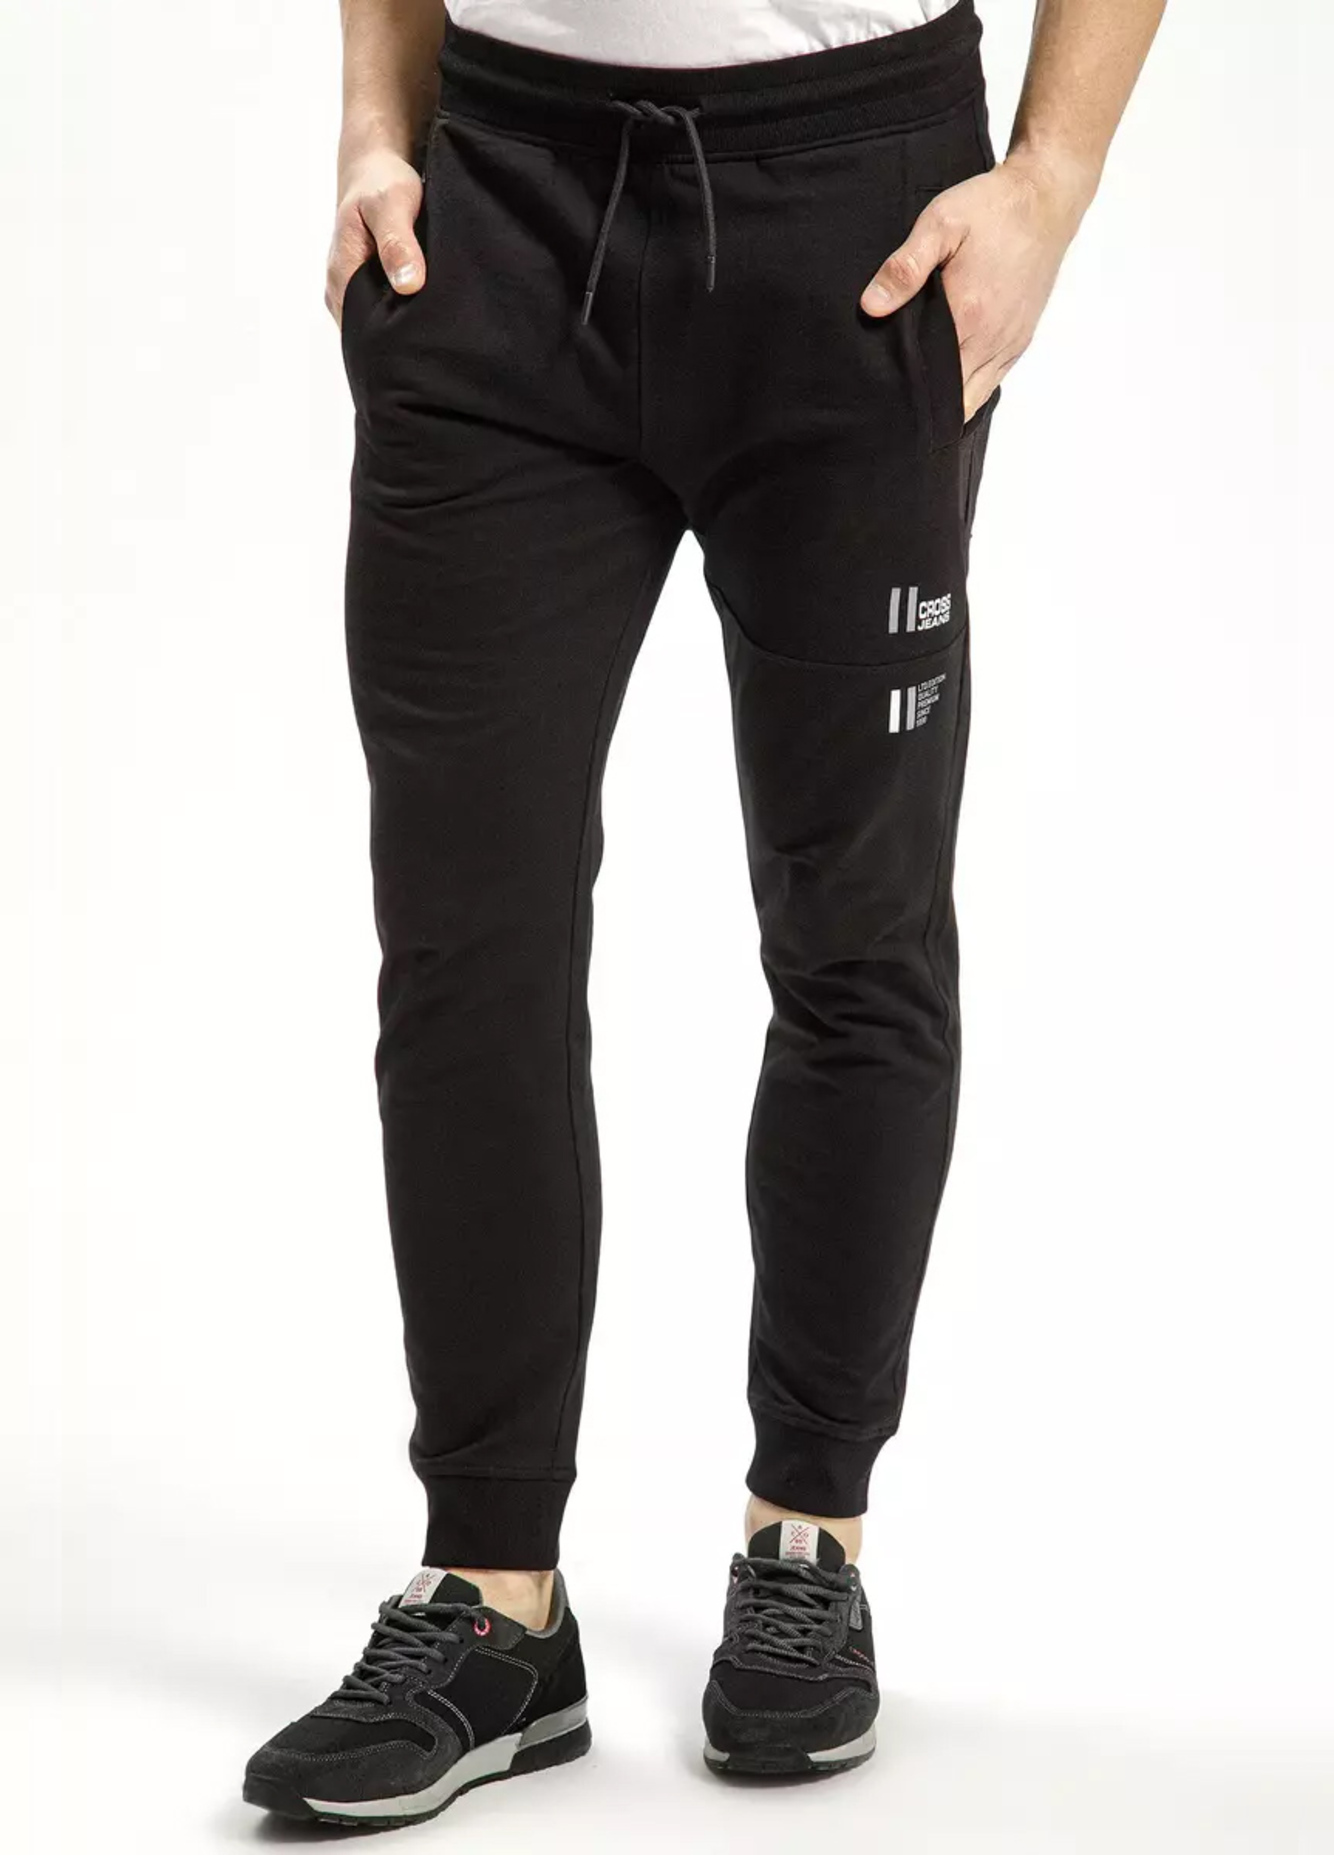 Cross Jeans Sweatpants Black 020 - 49061-020